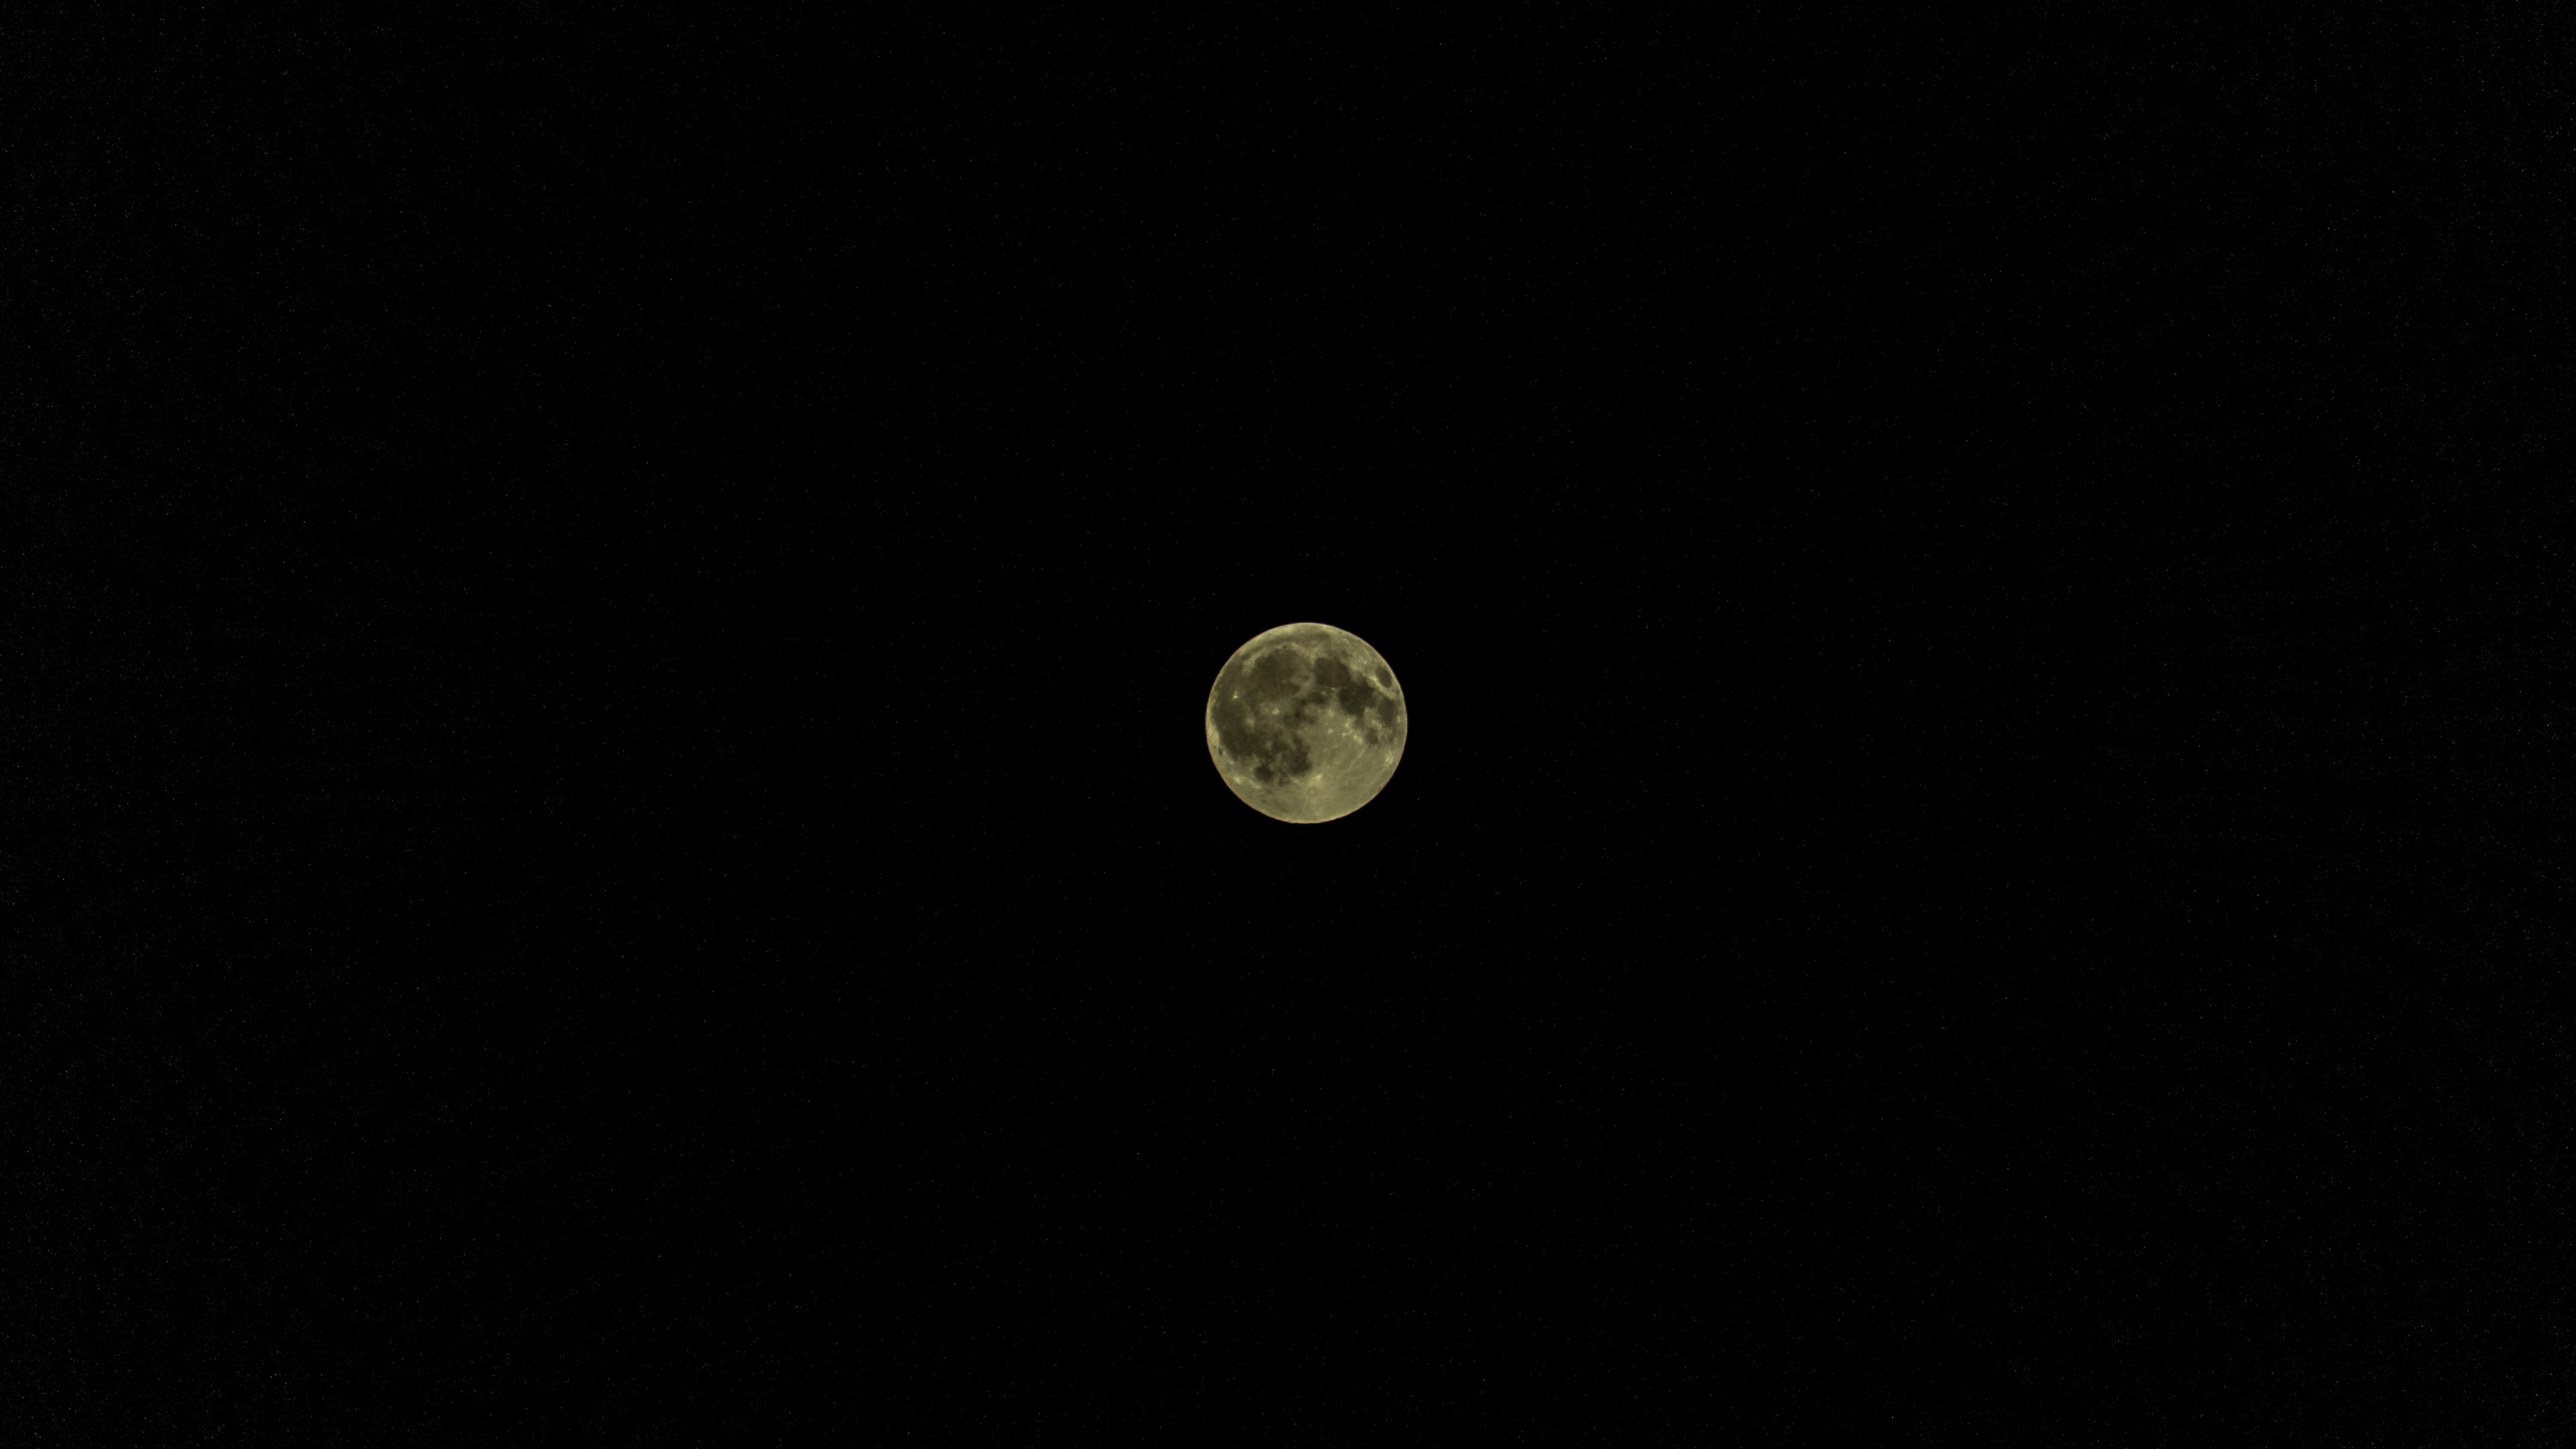 Full Moon in The Night Sky. Wallpaper in 3840x2160 Resolution